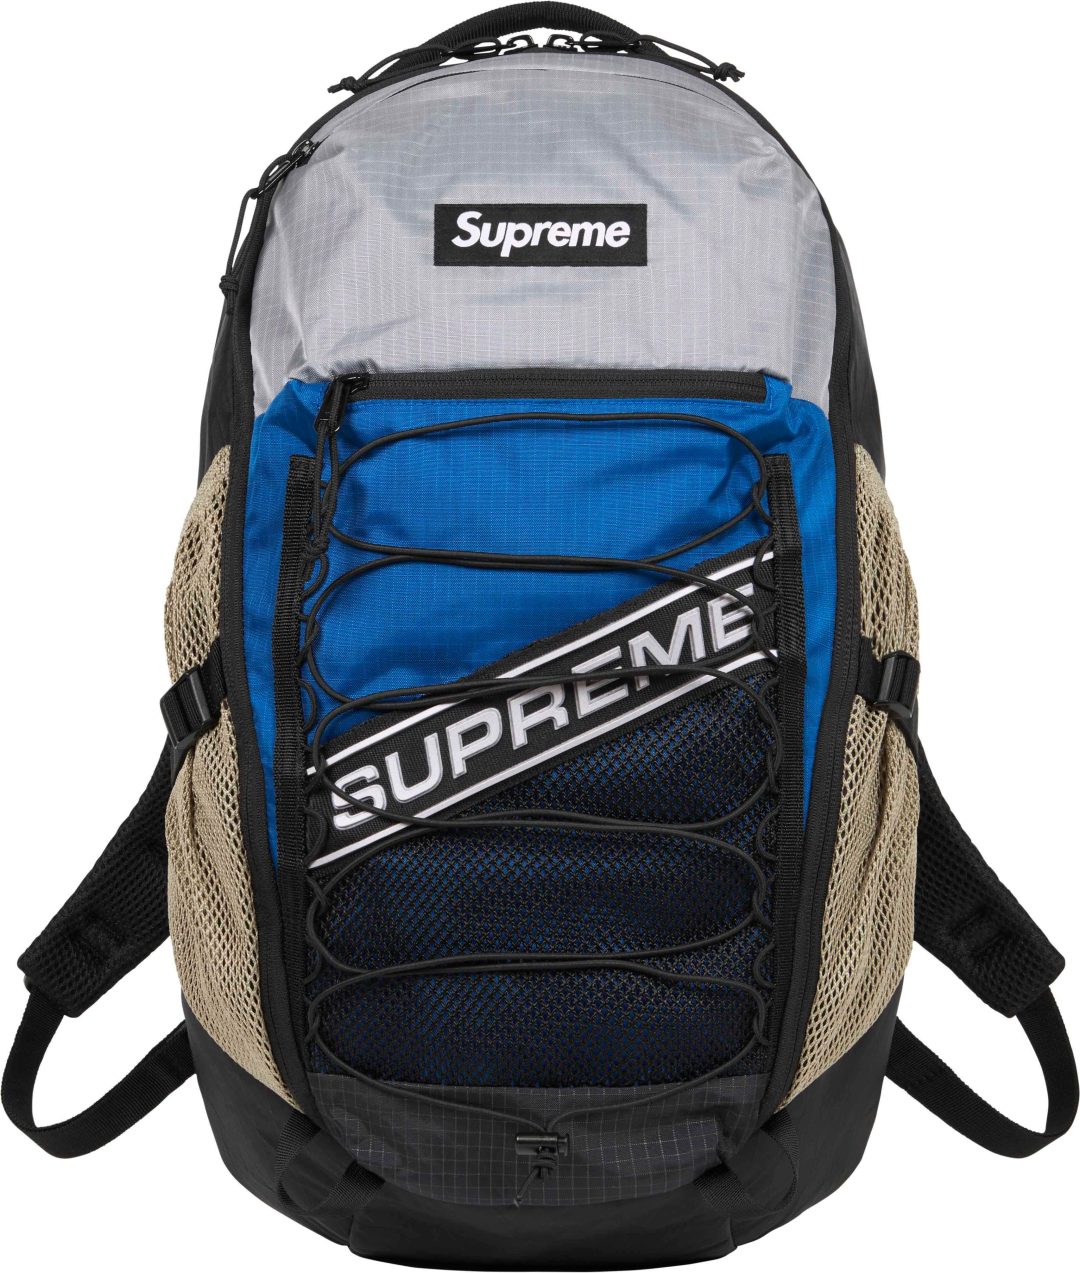 23aw Supreme Backpack Blue バックパック シュプリーム-